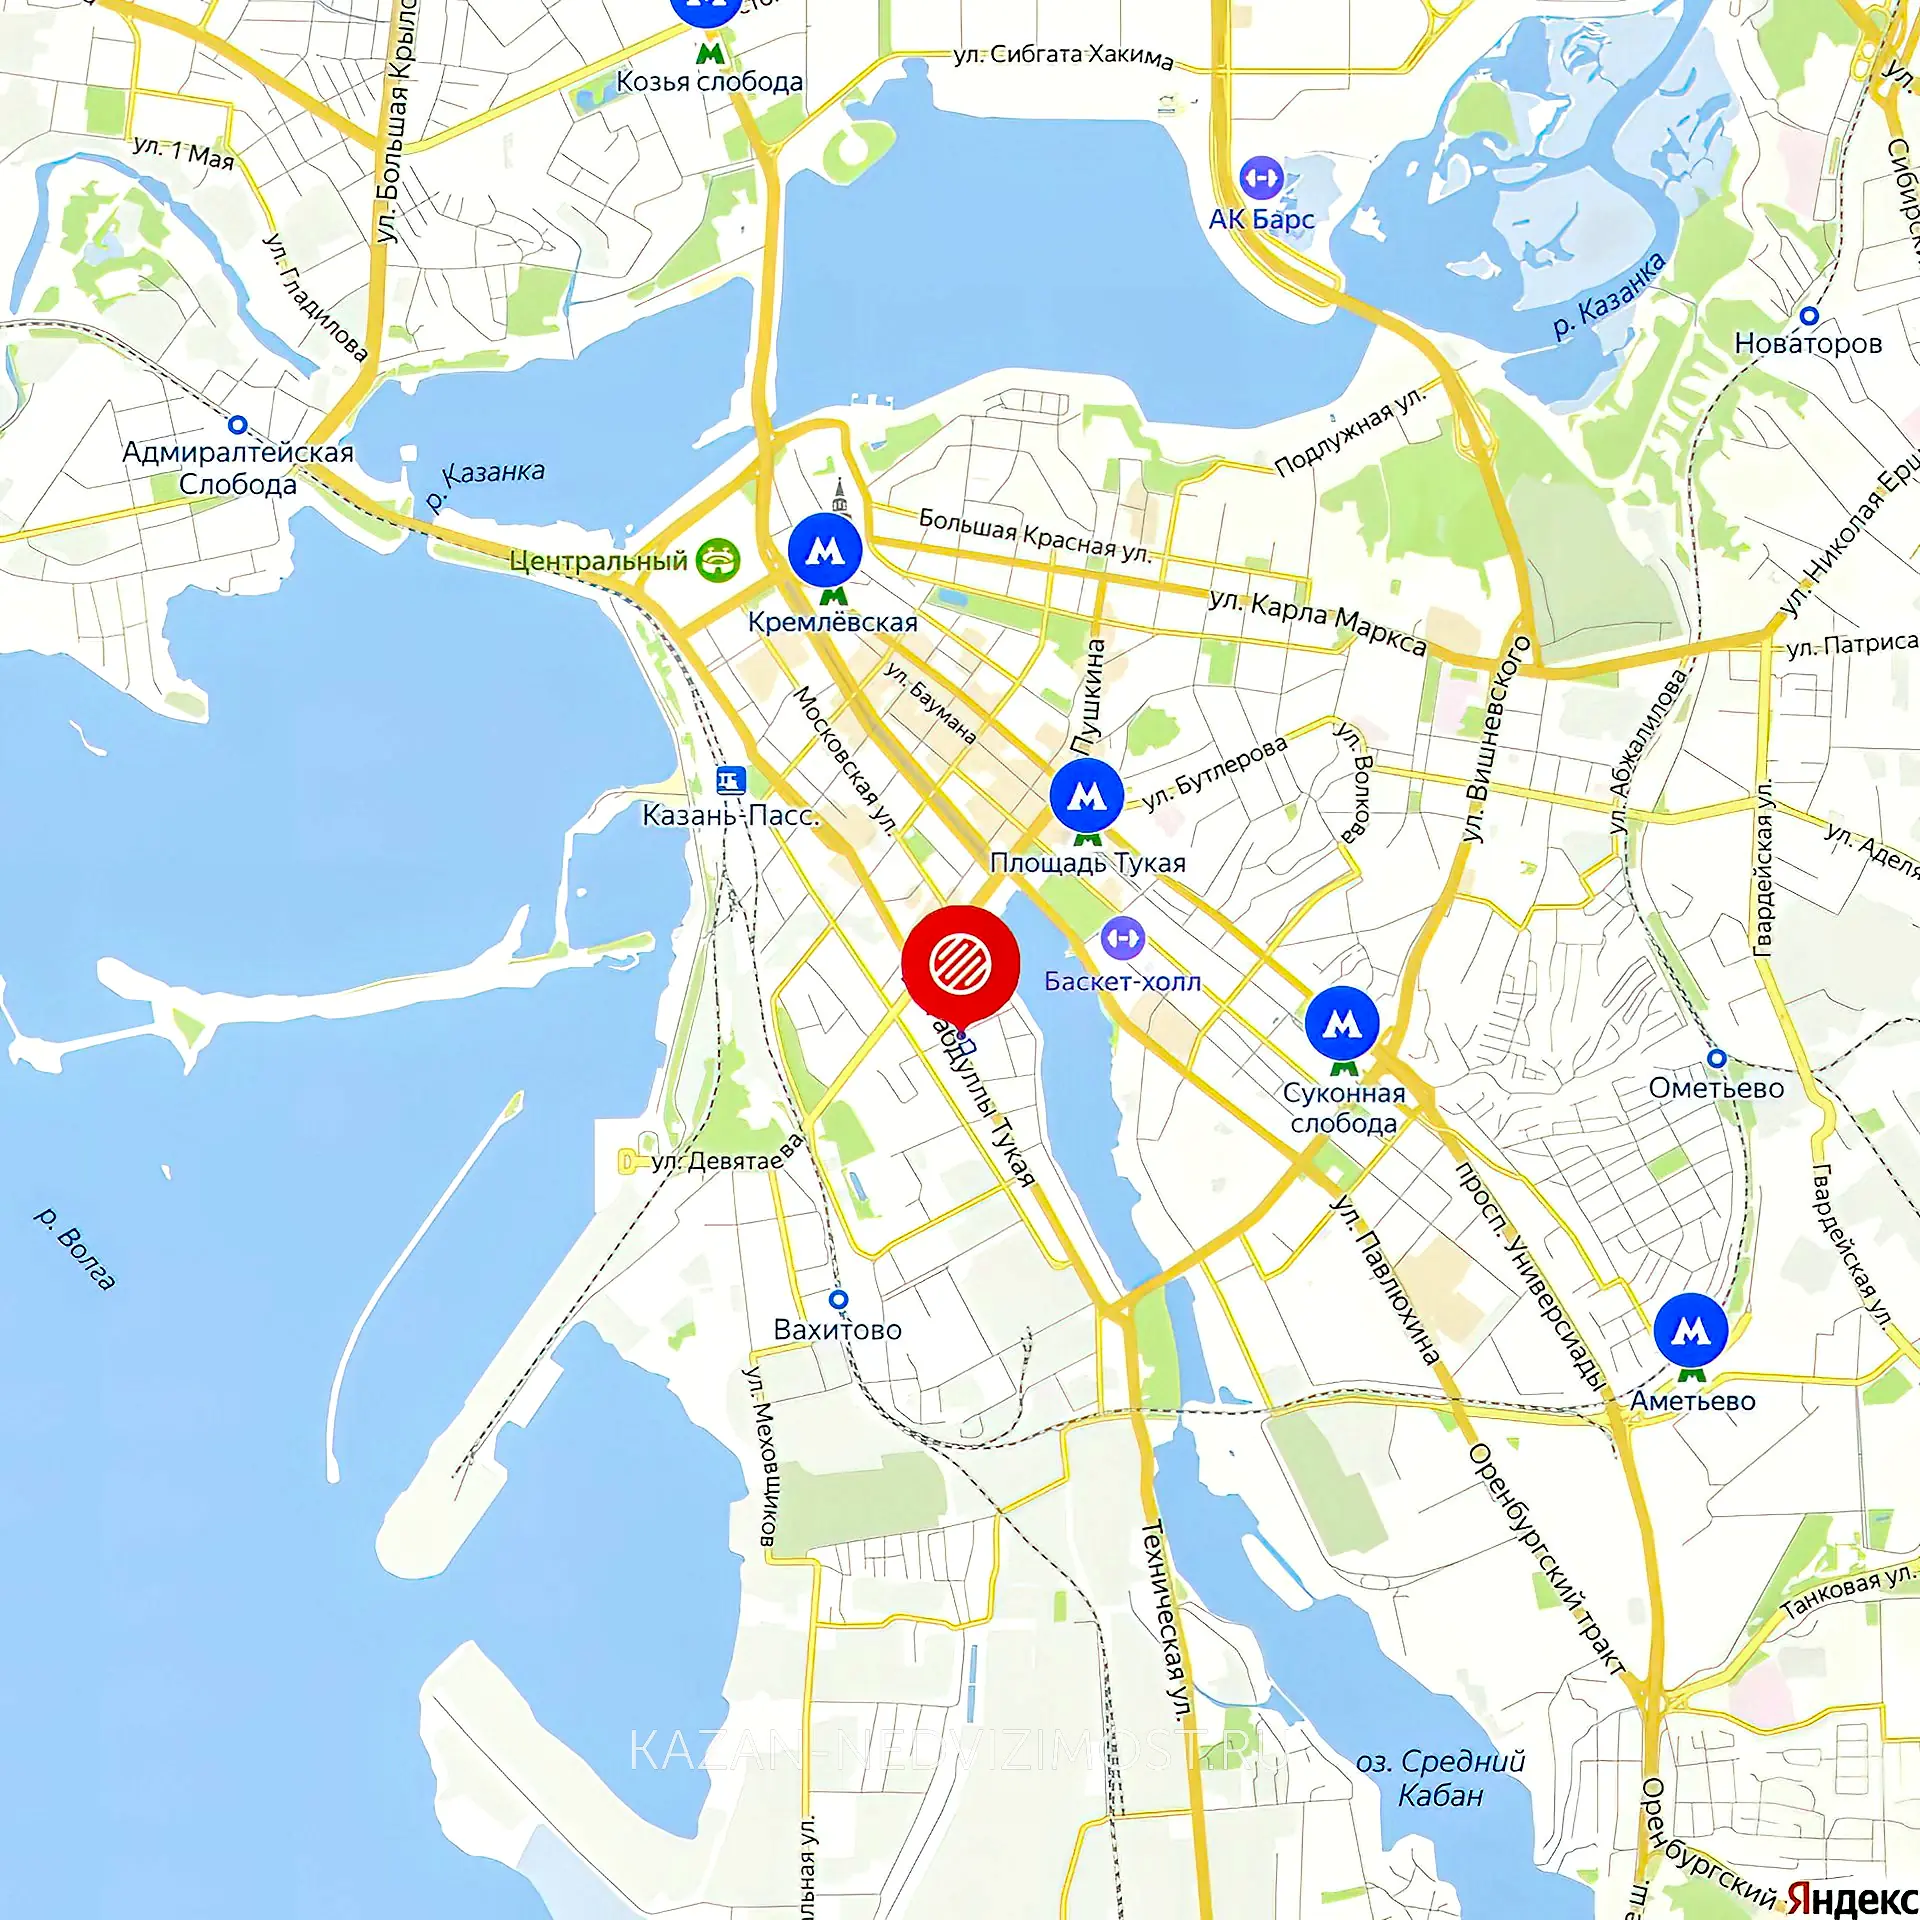 Расположение и маршрут на карте от ЖК Юнусовская усадьба до центра города